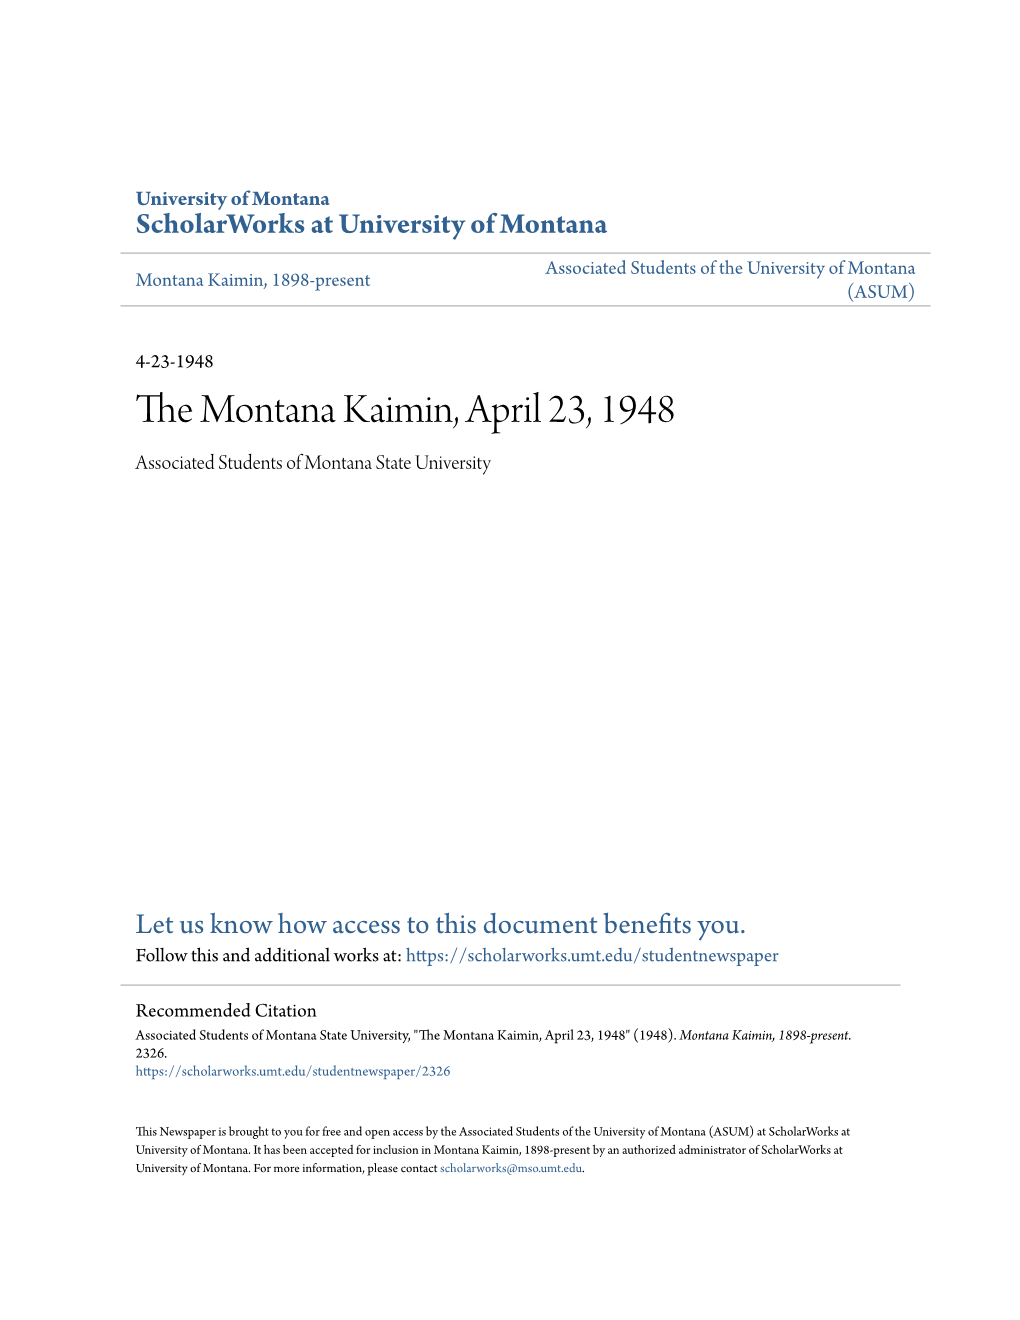 The Montana Kaimin, April 23, 1948